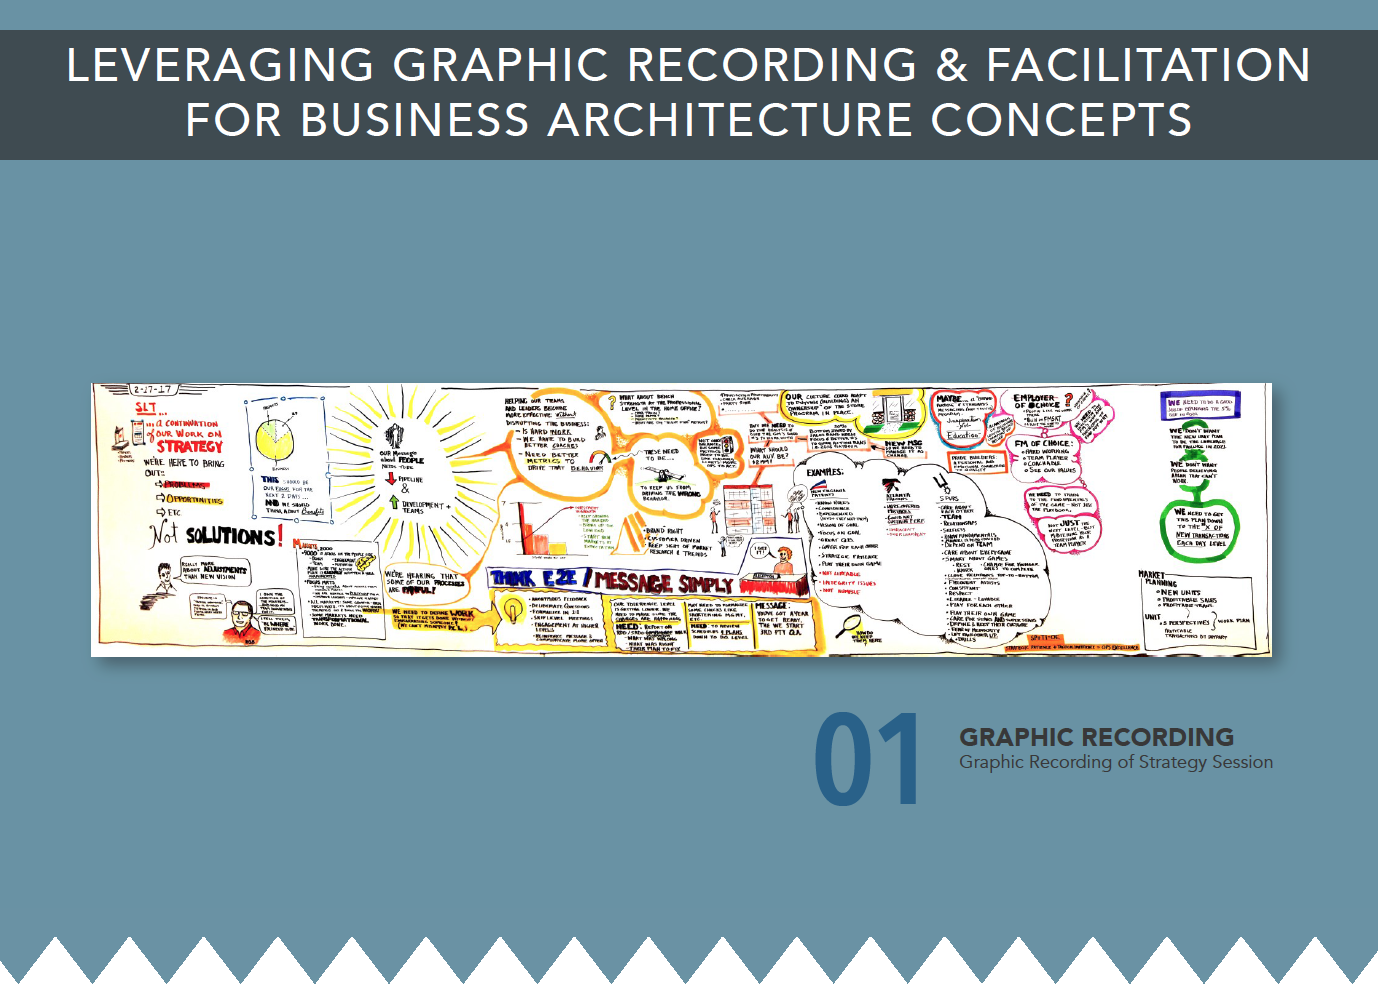 S2E Examples of Graphic Facilitation & Recording